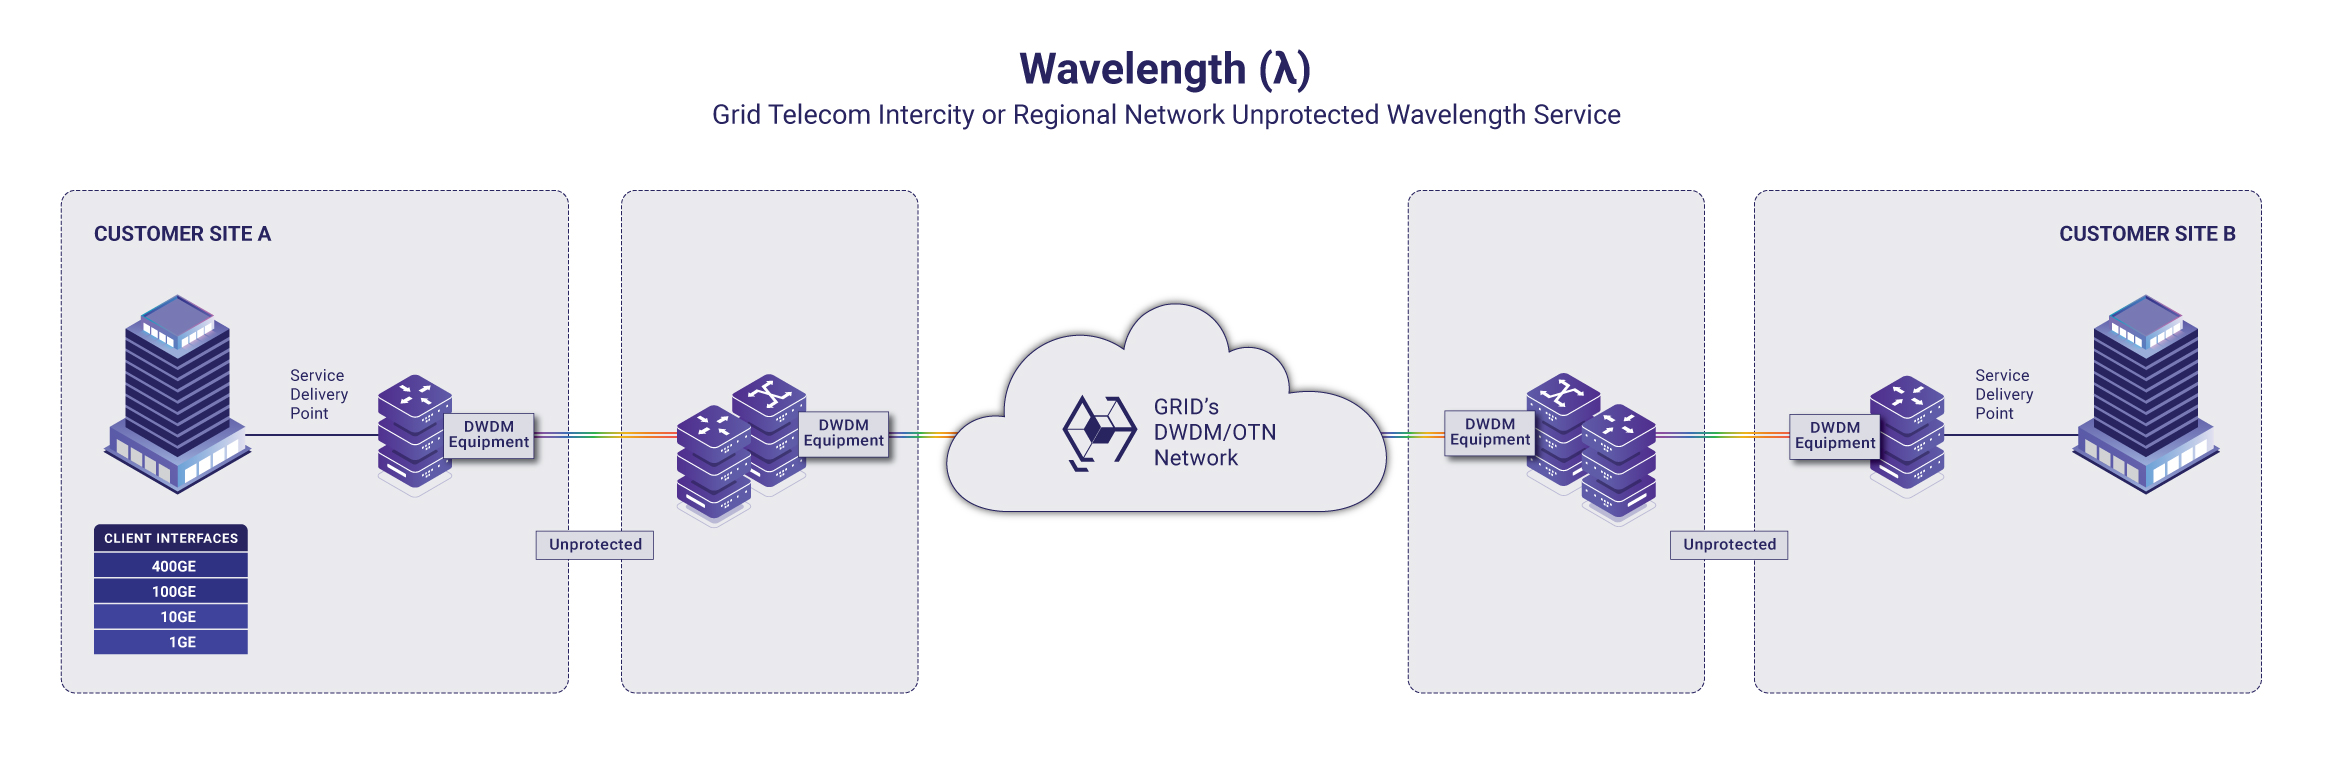 Grid Telecom Intercity or Regional Network Unprotected Wavelength Service